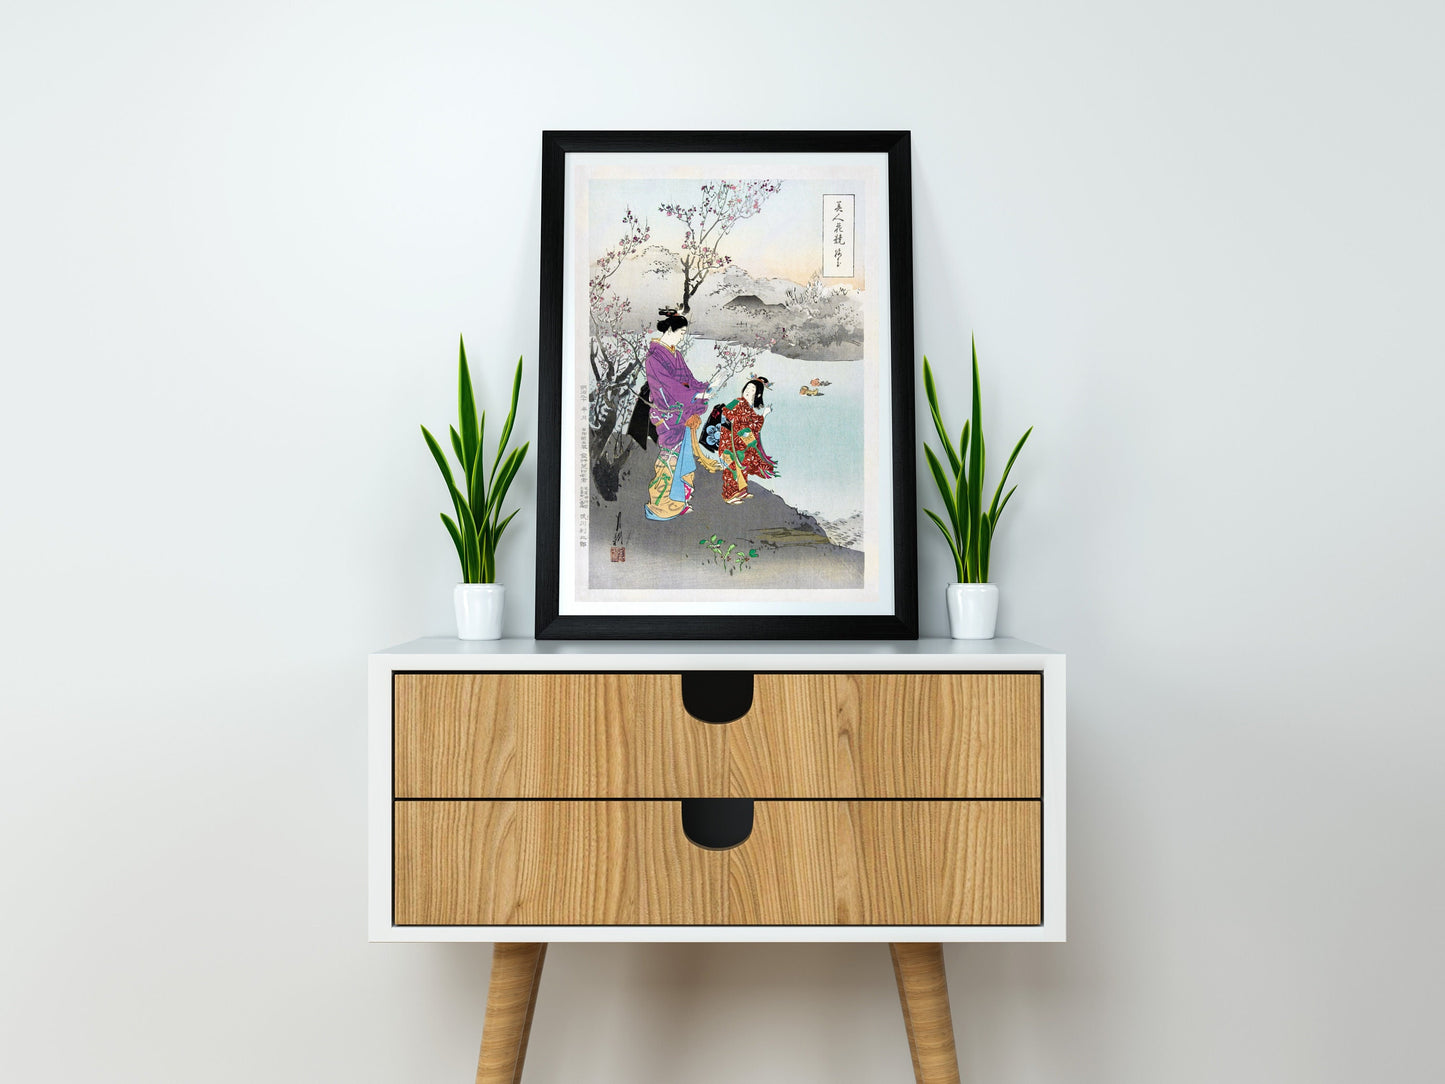 Admiring the Plum Blossom by Ogata Gekko Japanese Art Print Poster Wall Hanging Decor A4 A3 A2